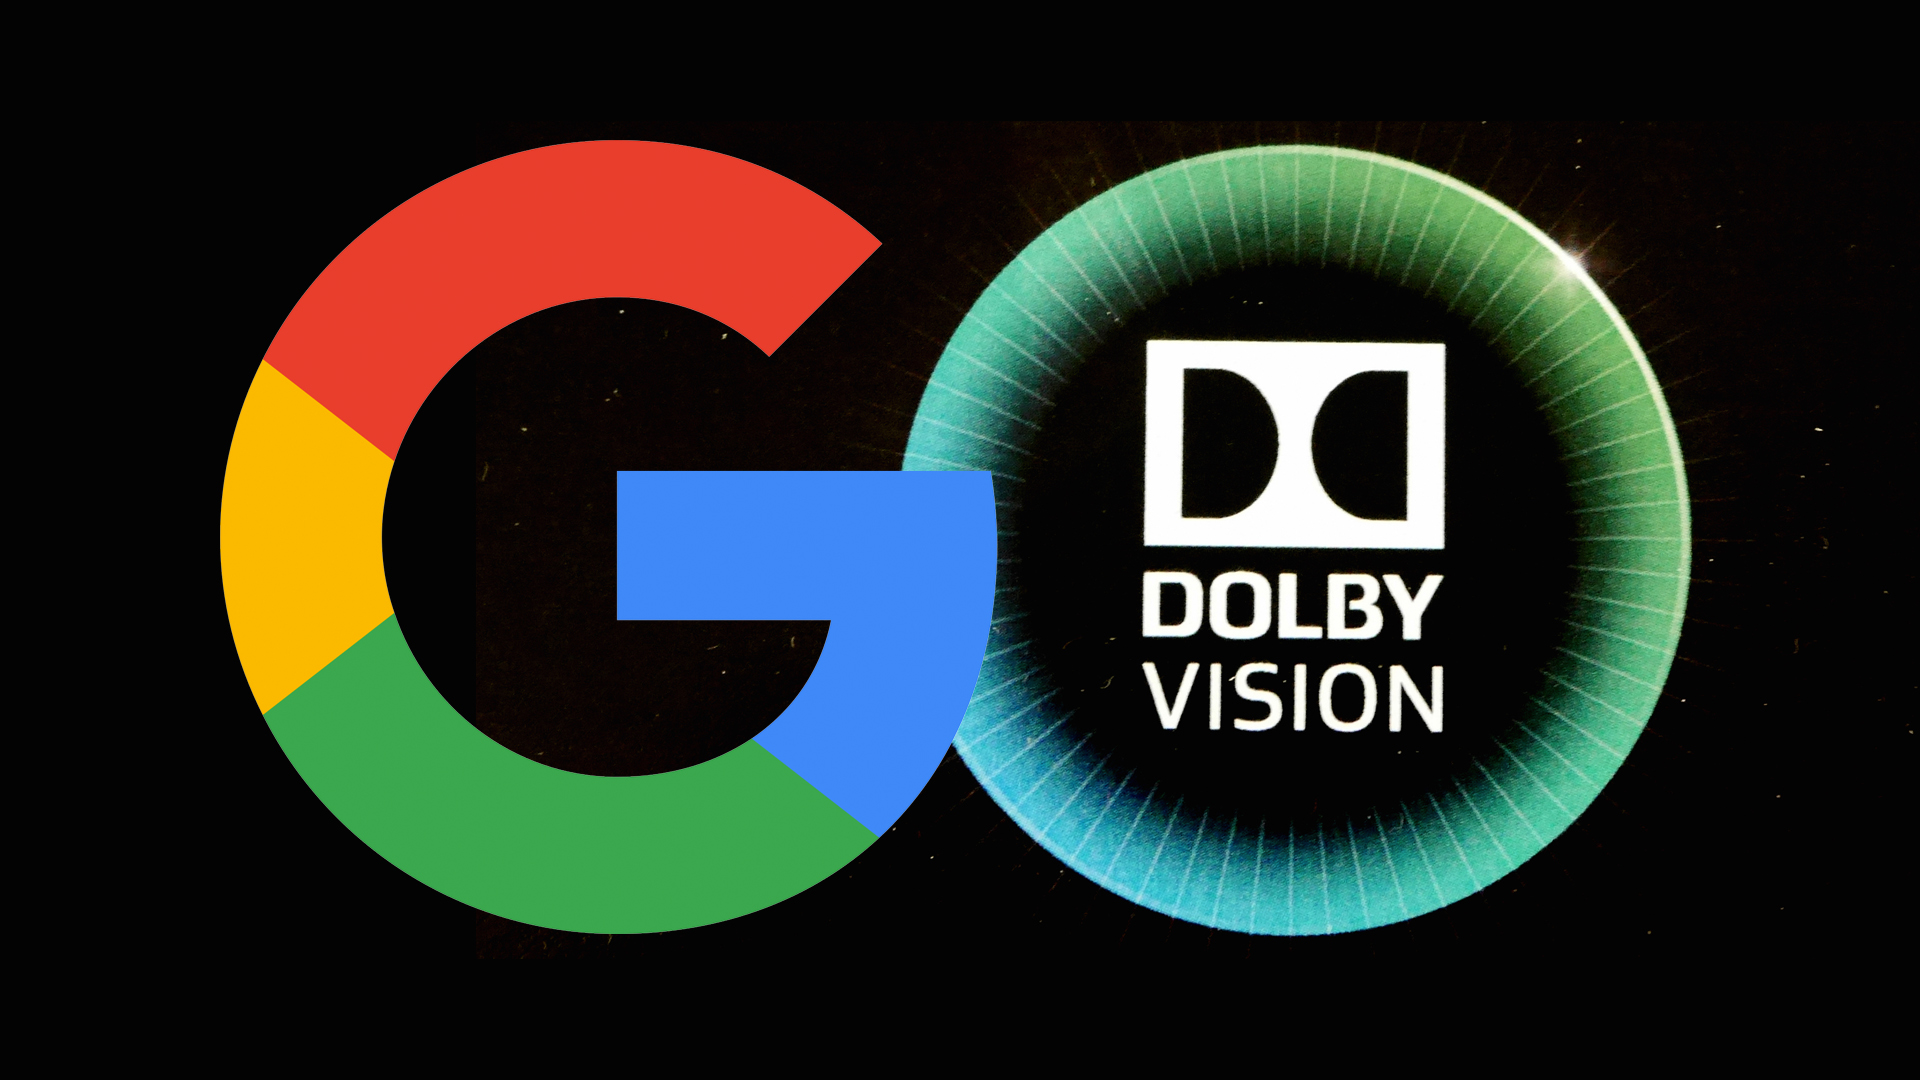 Google logo next to Dolby Vision logo on black background